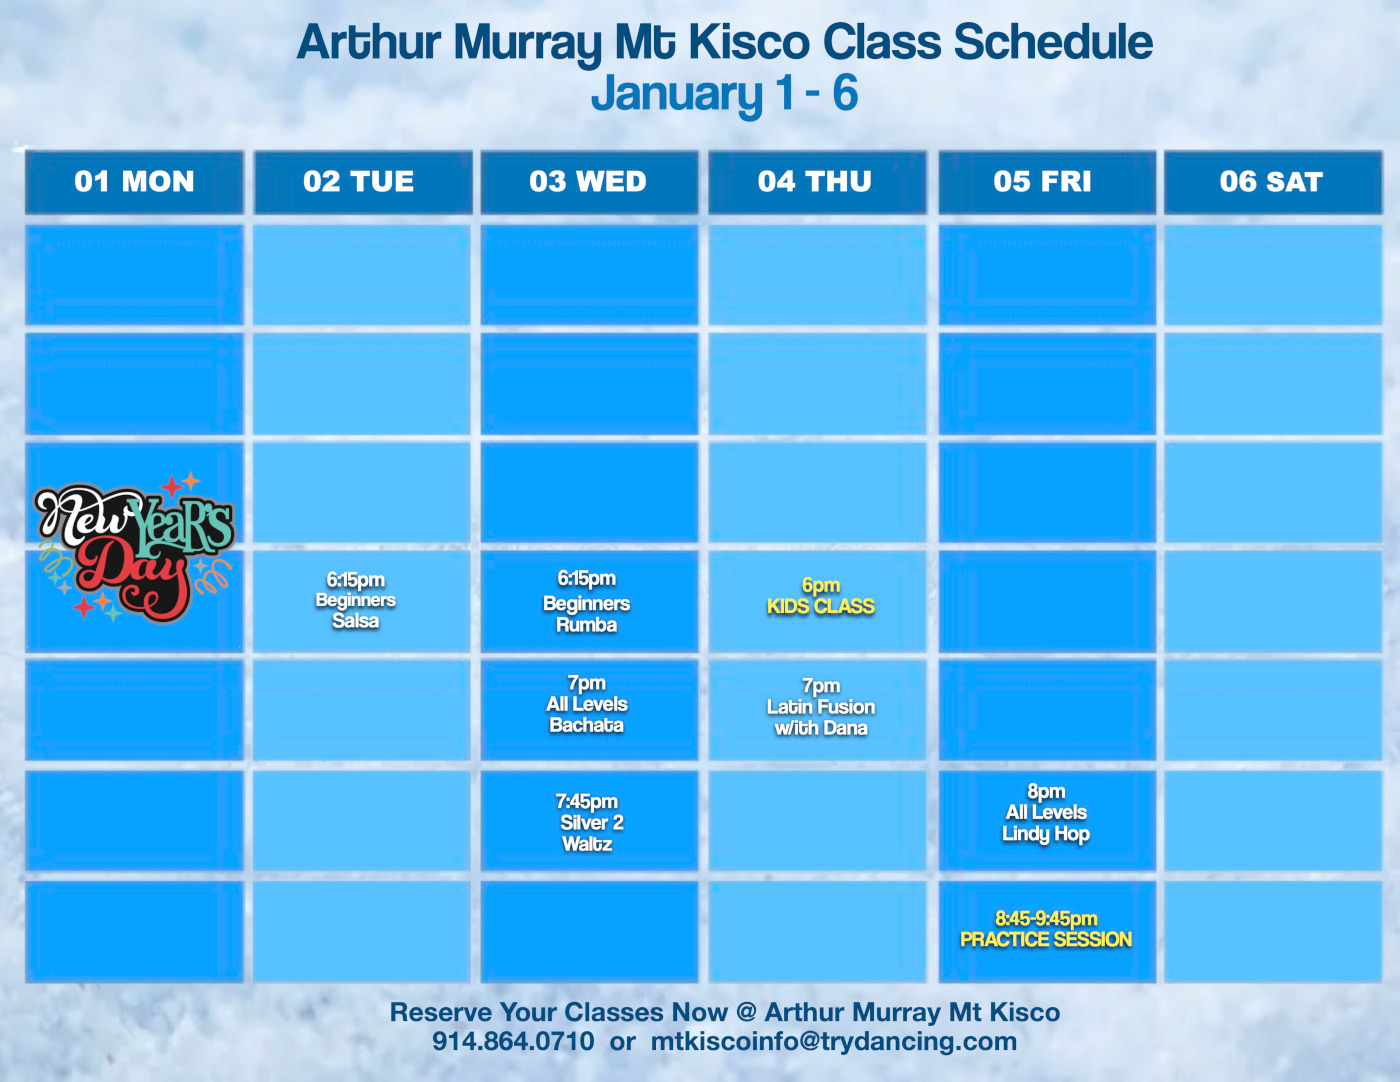 Mount Kisco Studio Calendar, Mt. Kisco Dance, Wedding Dance Lessons